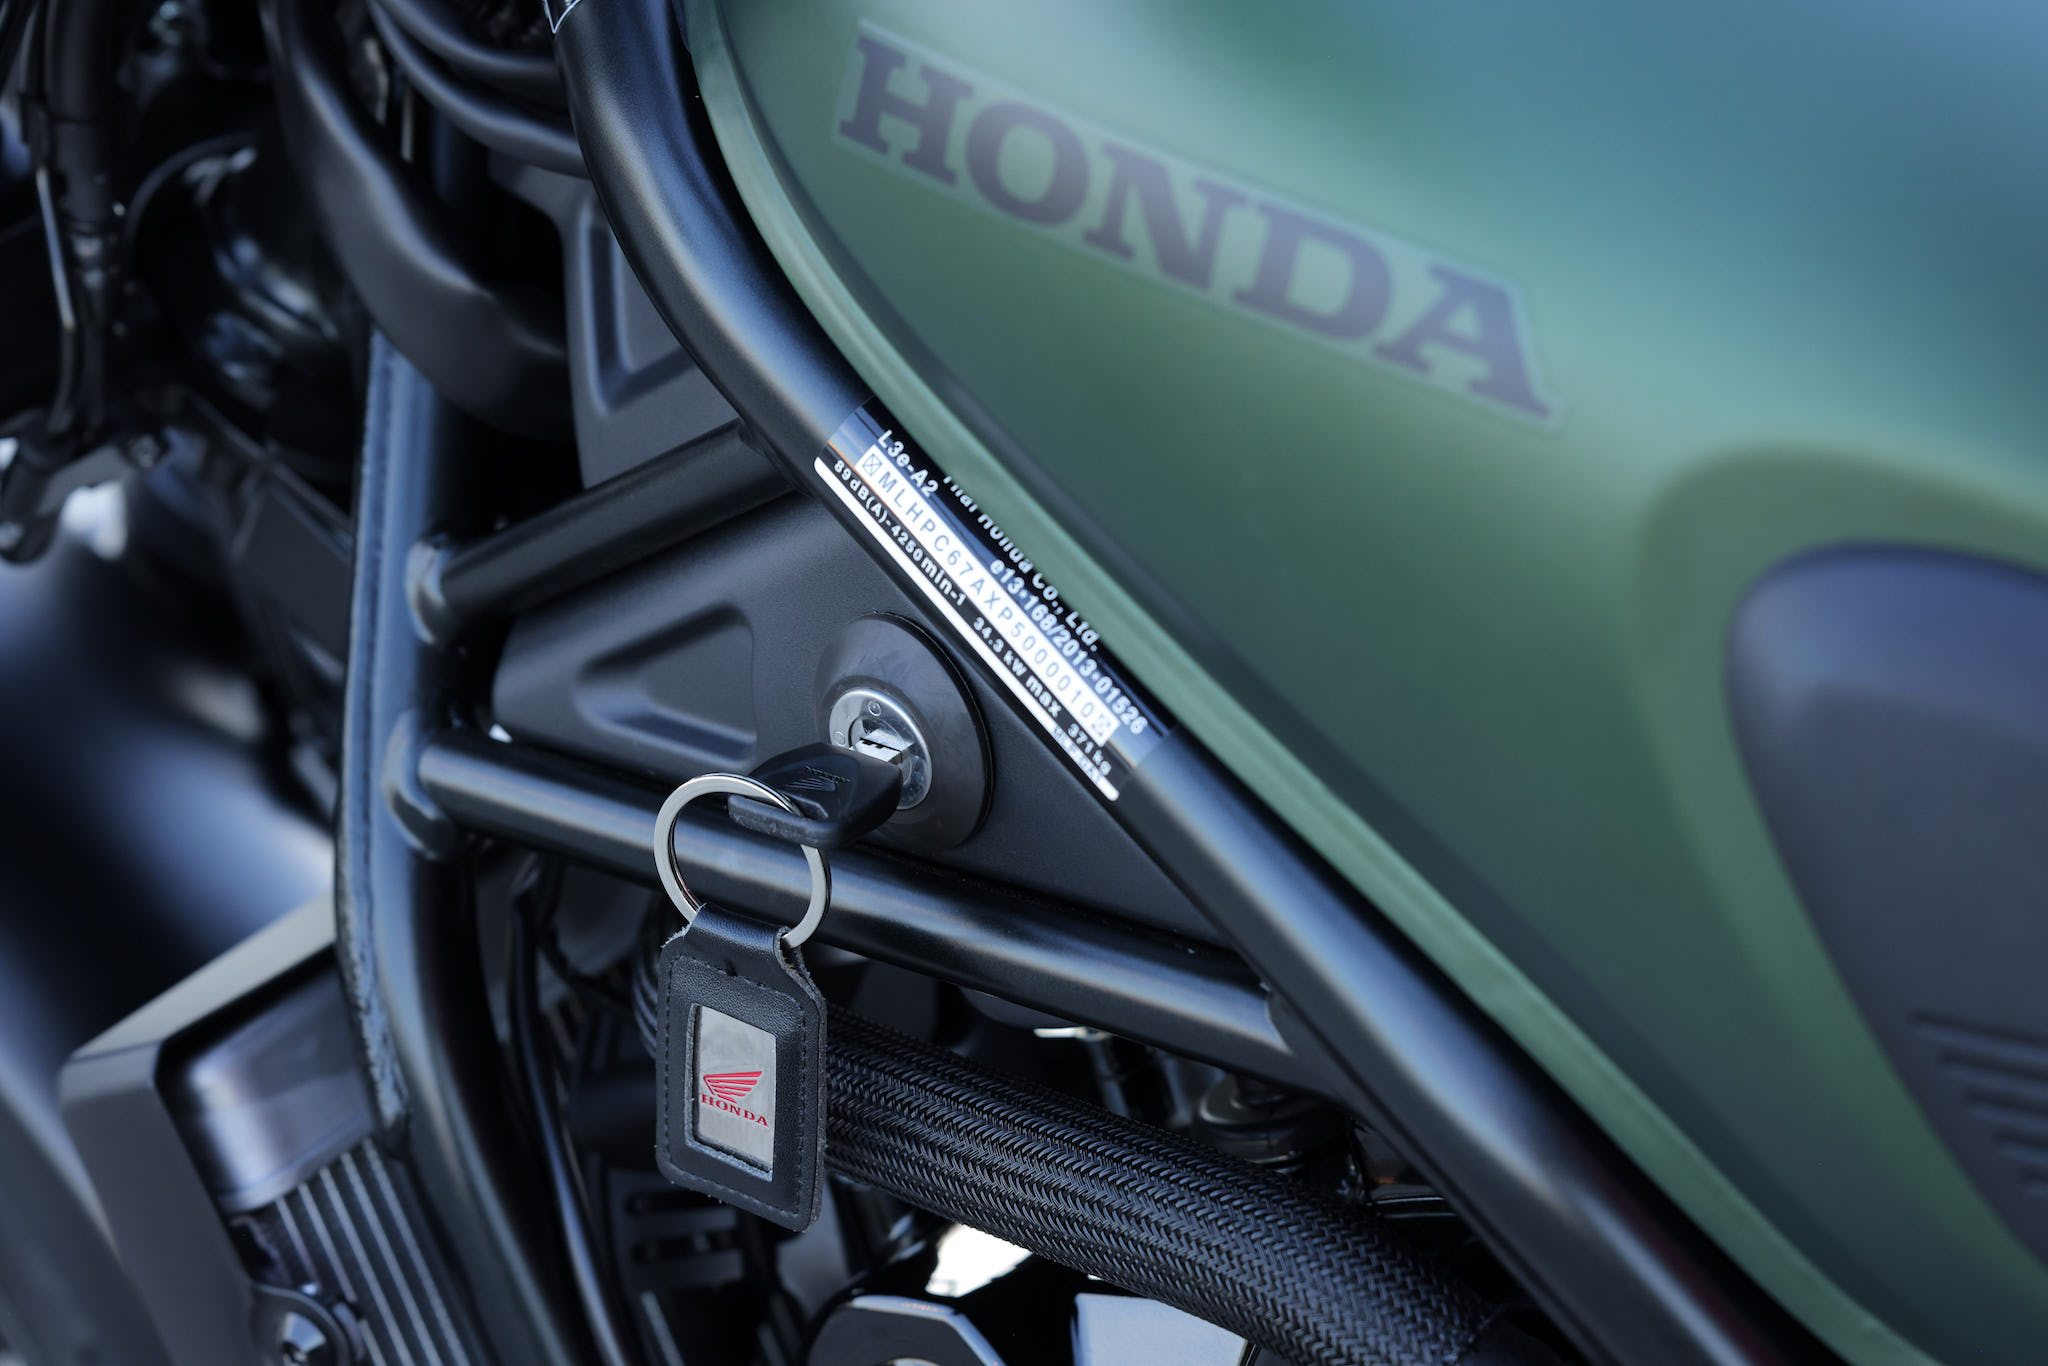 Honda clé